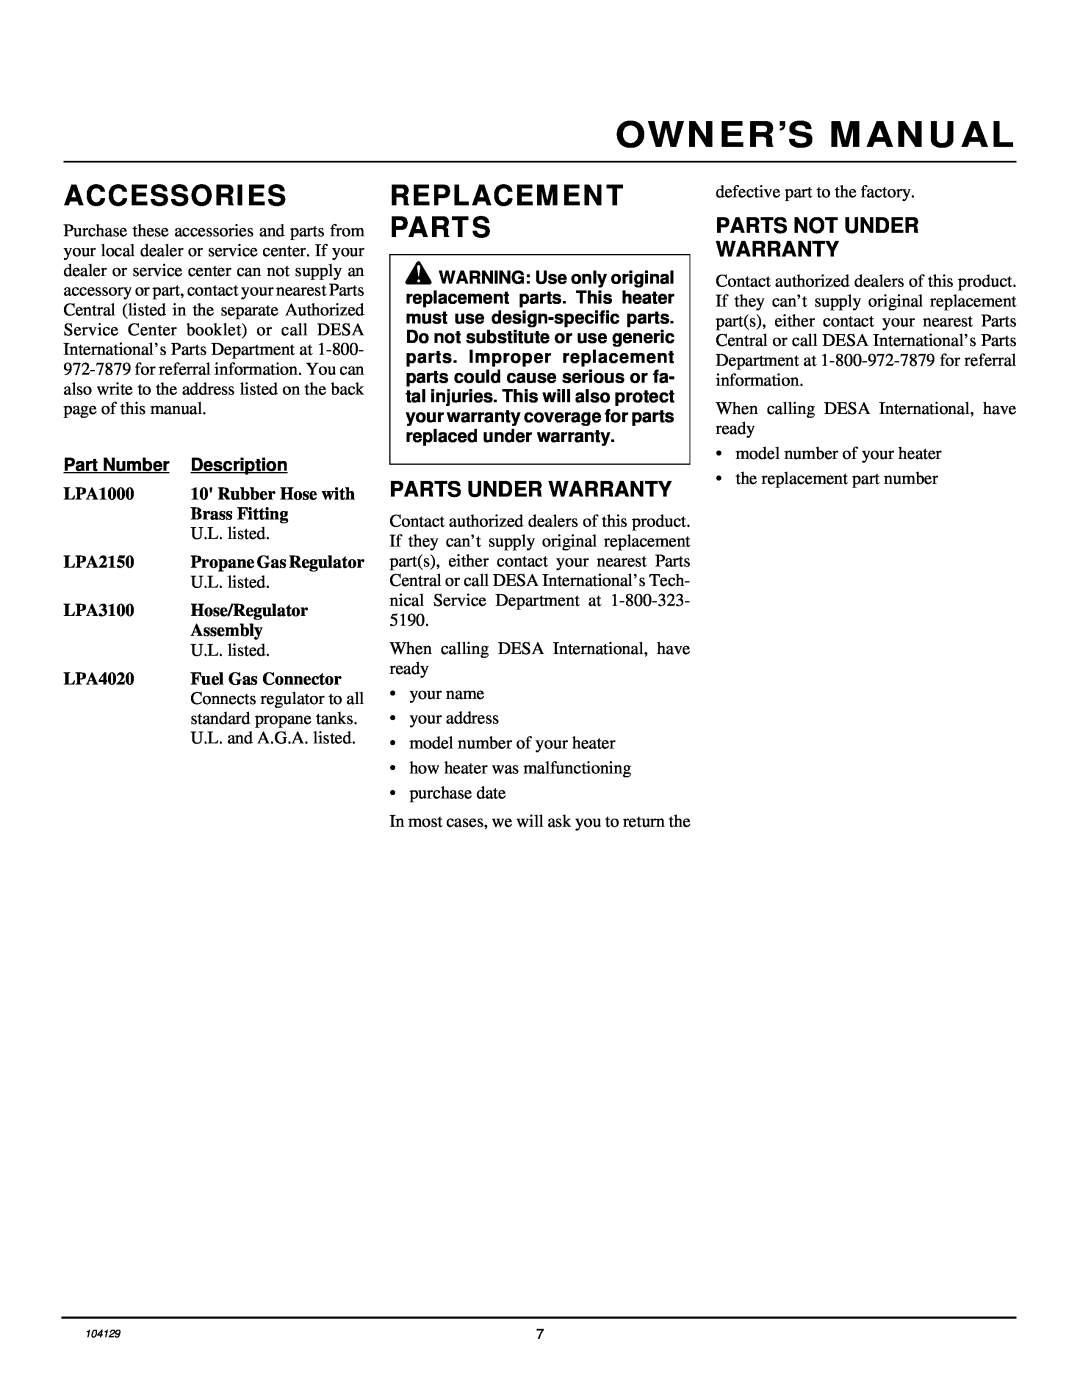 Desa TC100R owner manual Accessories, Replacement Parts, Parts Under Warranty, Parts Not Under Warranty 